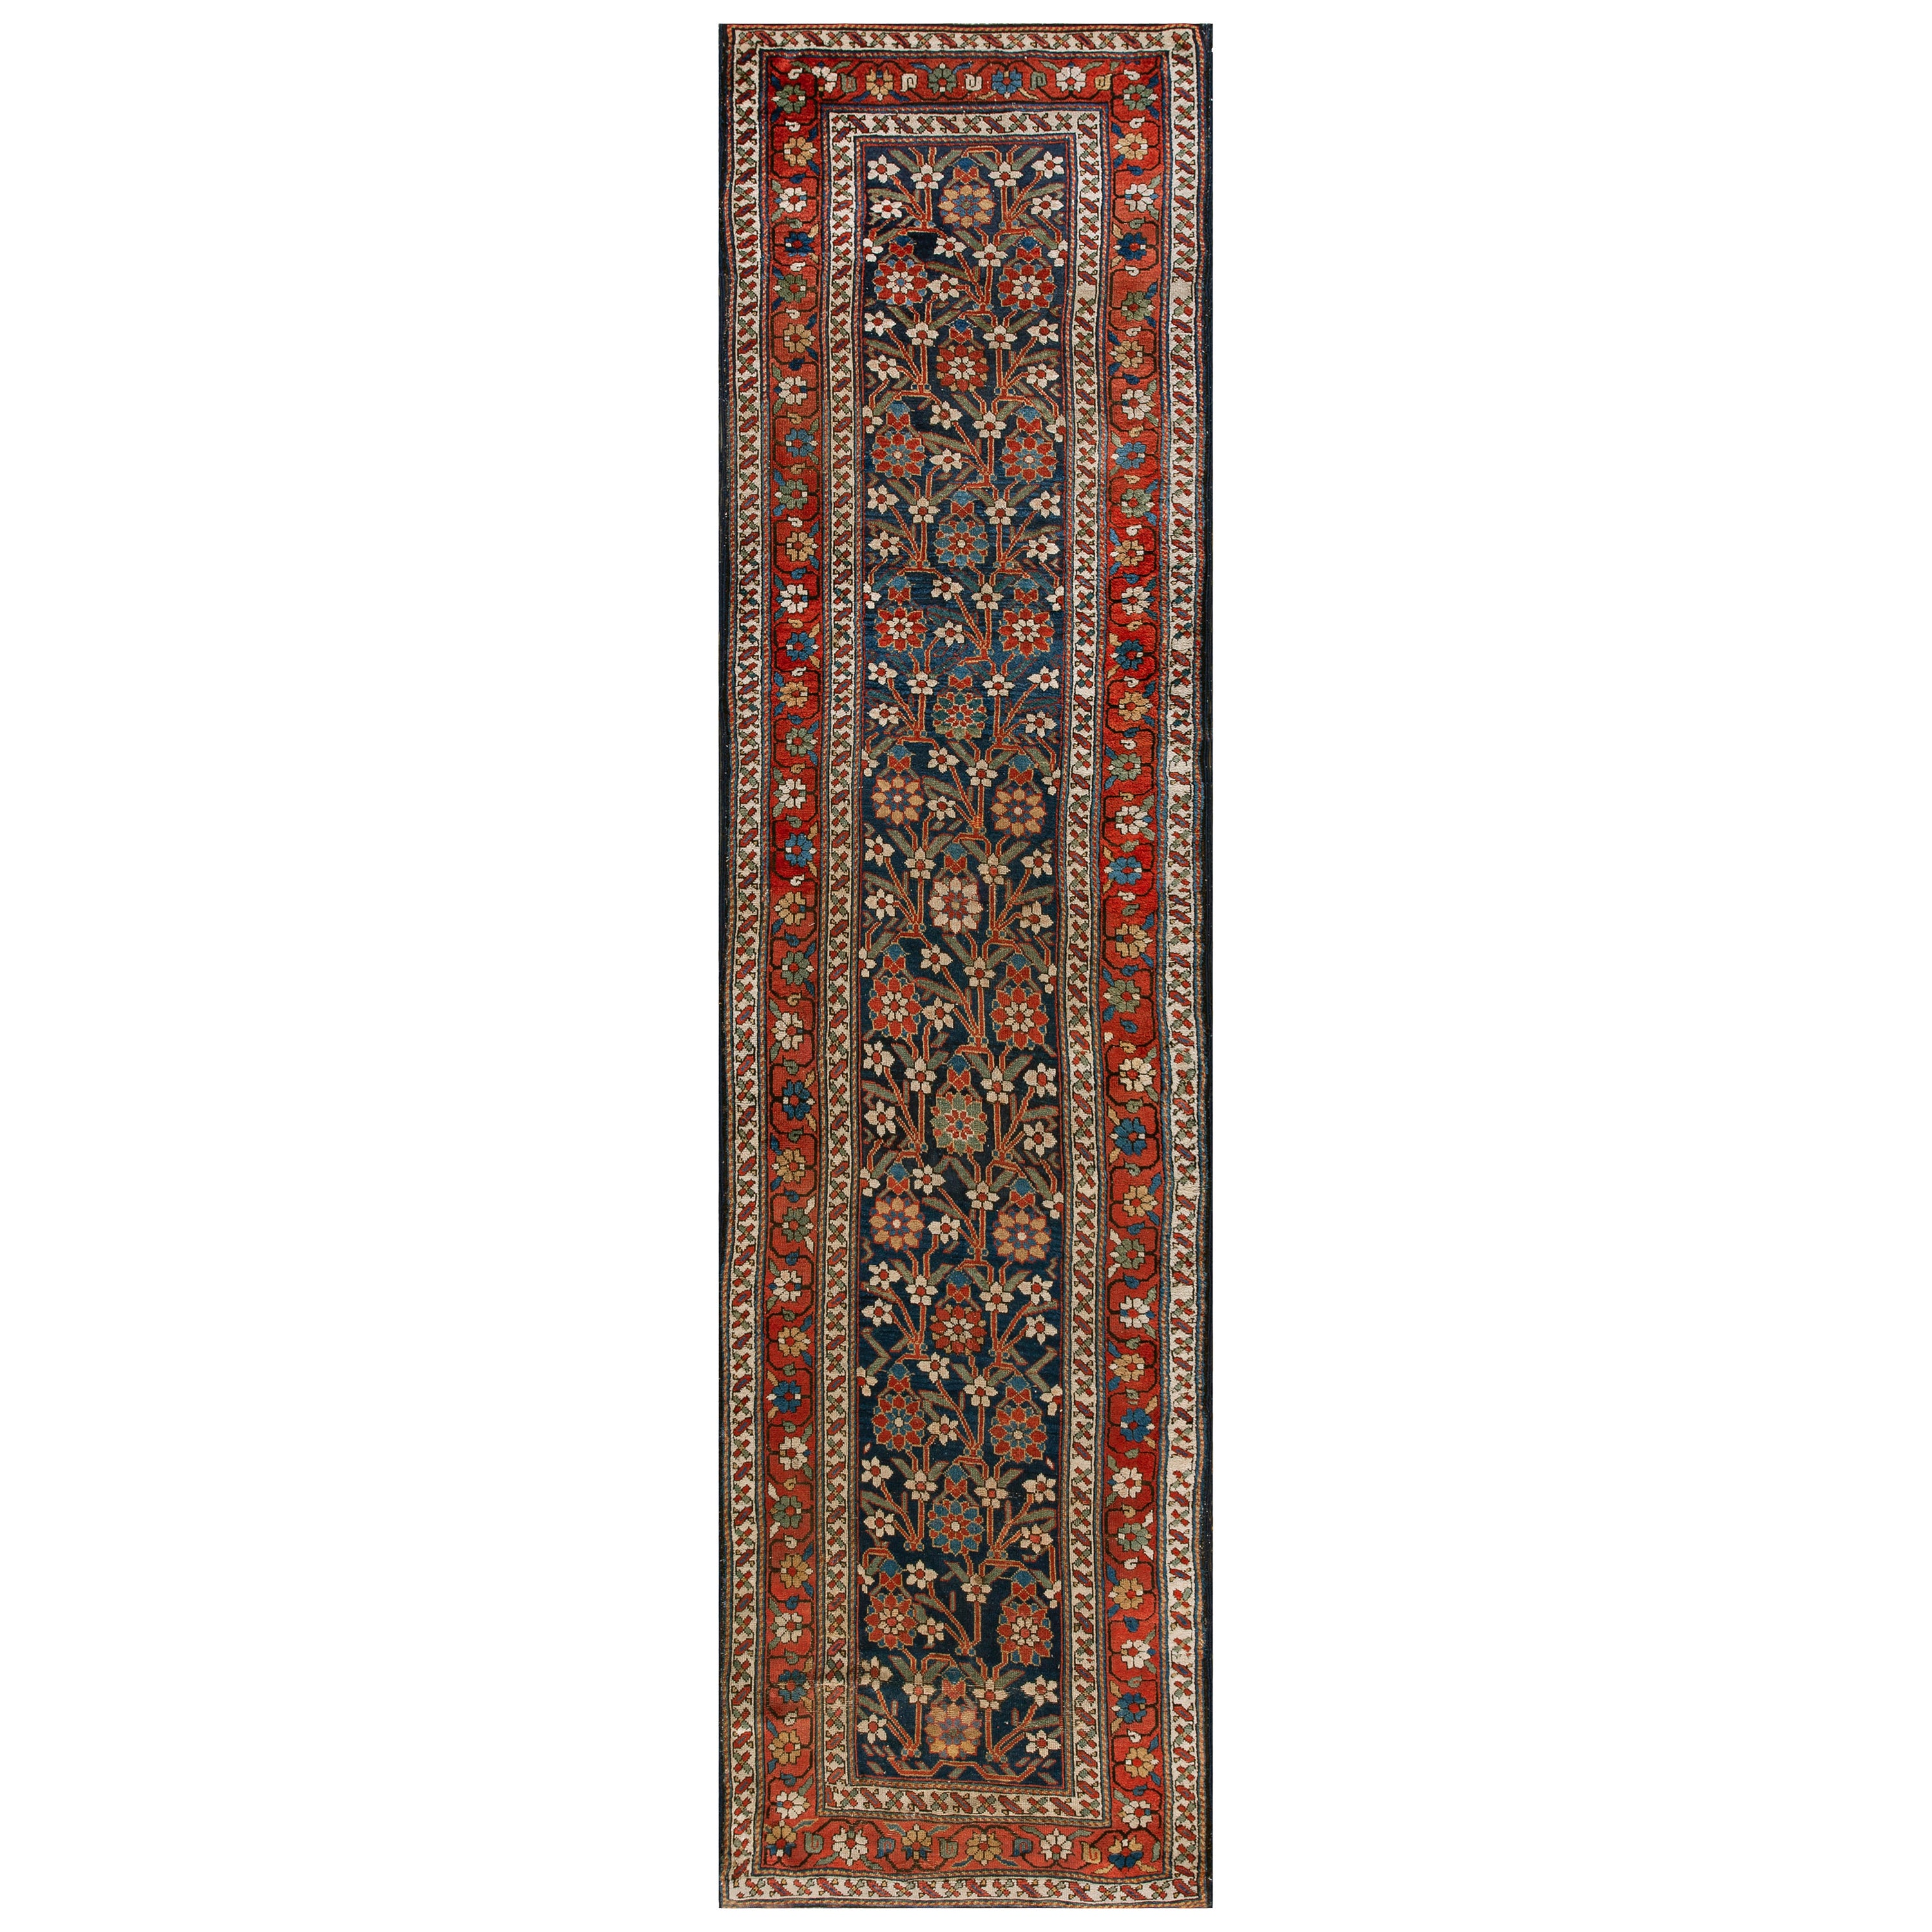 19th Century NW Persian Carpet ( 3' 3'' x 11' 8'' - 99 x 355 cm )